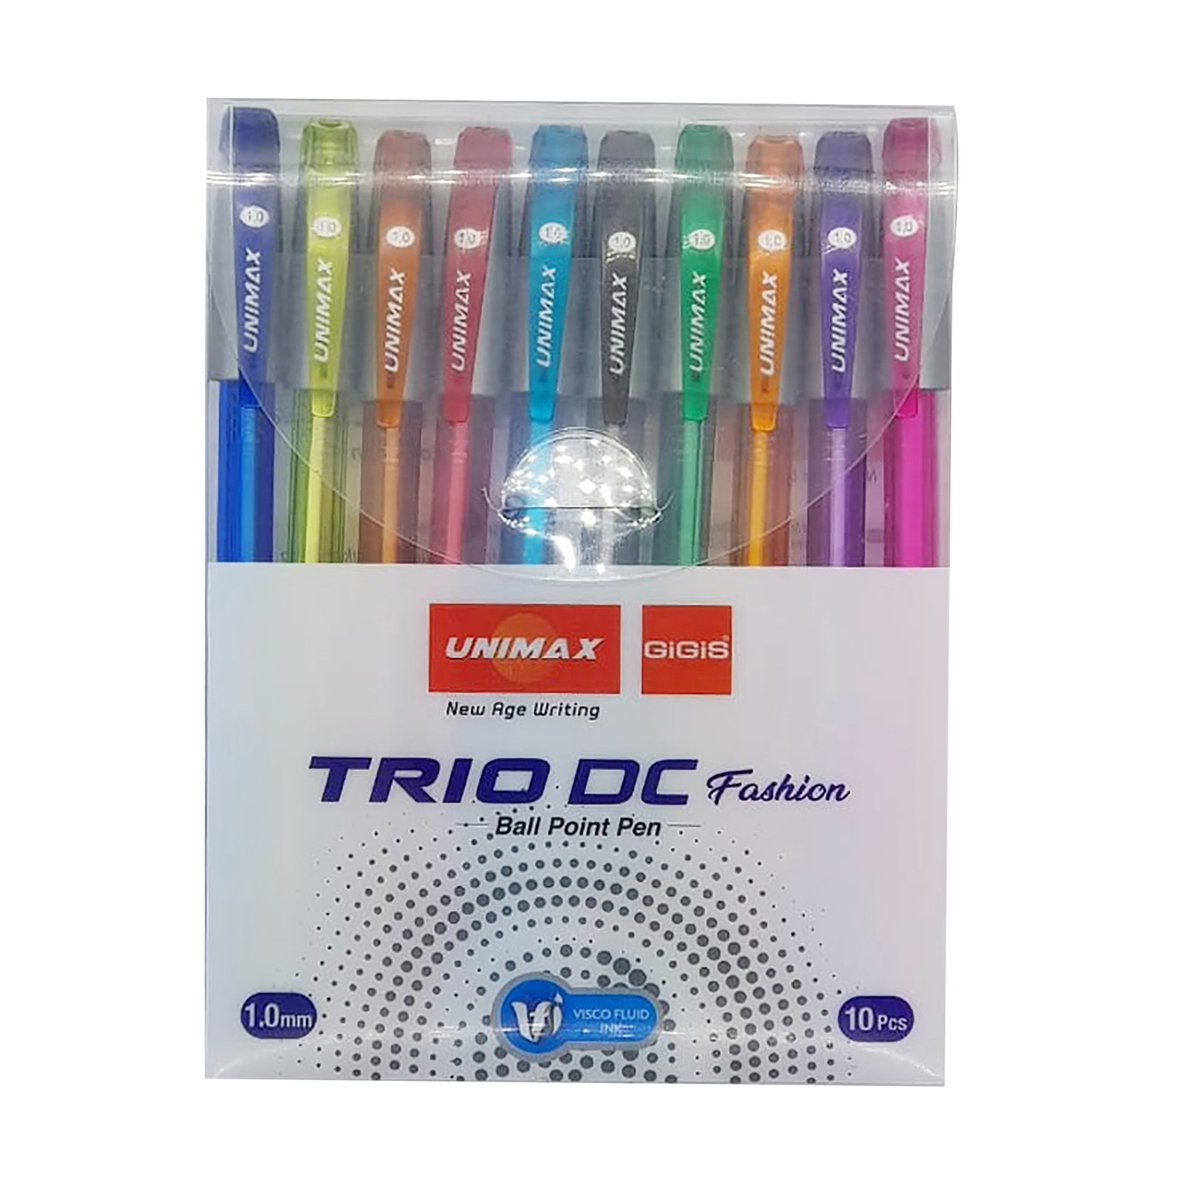 Unimax 1.0mm Pen Trio DC Fashion 10pcs